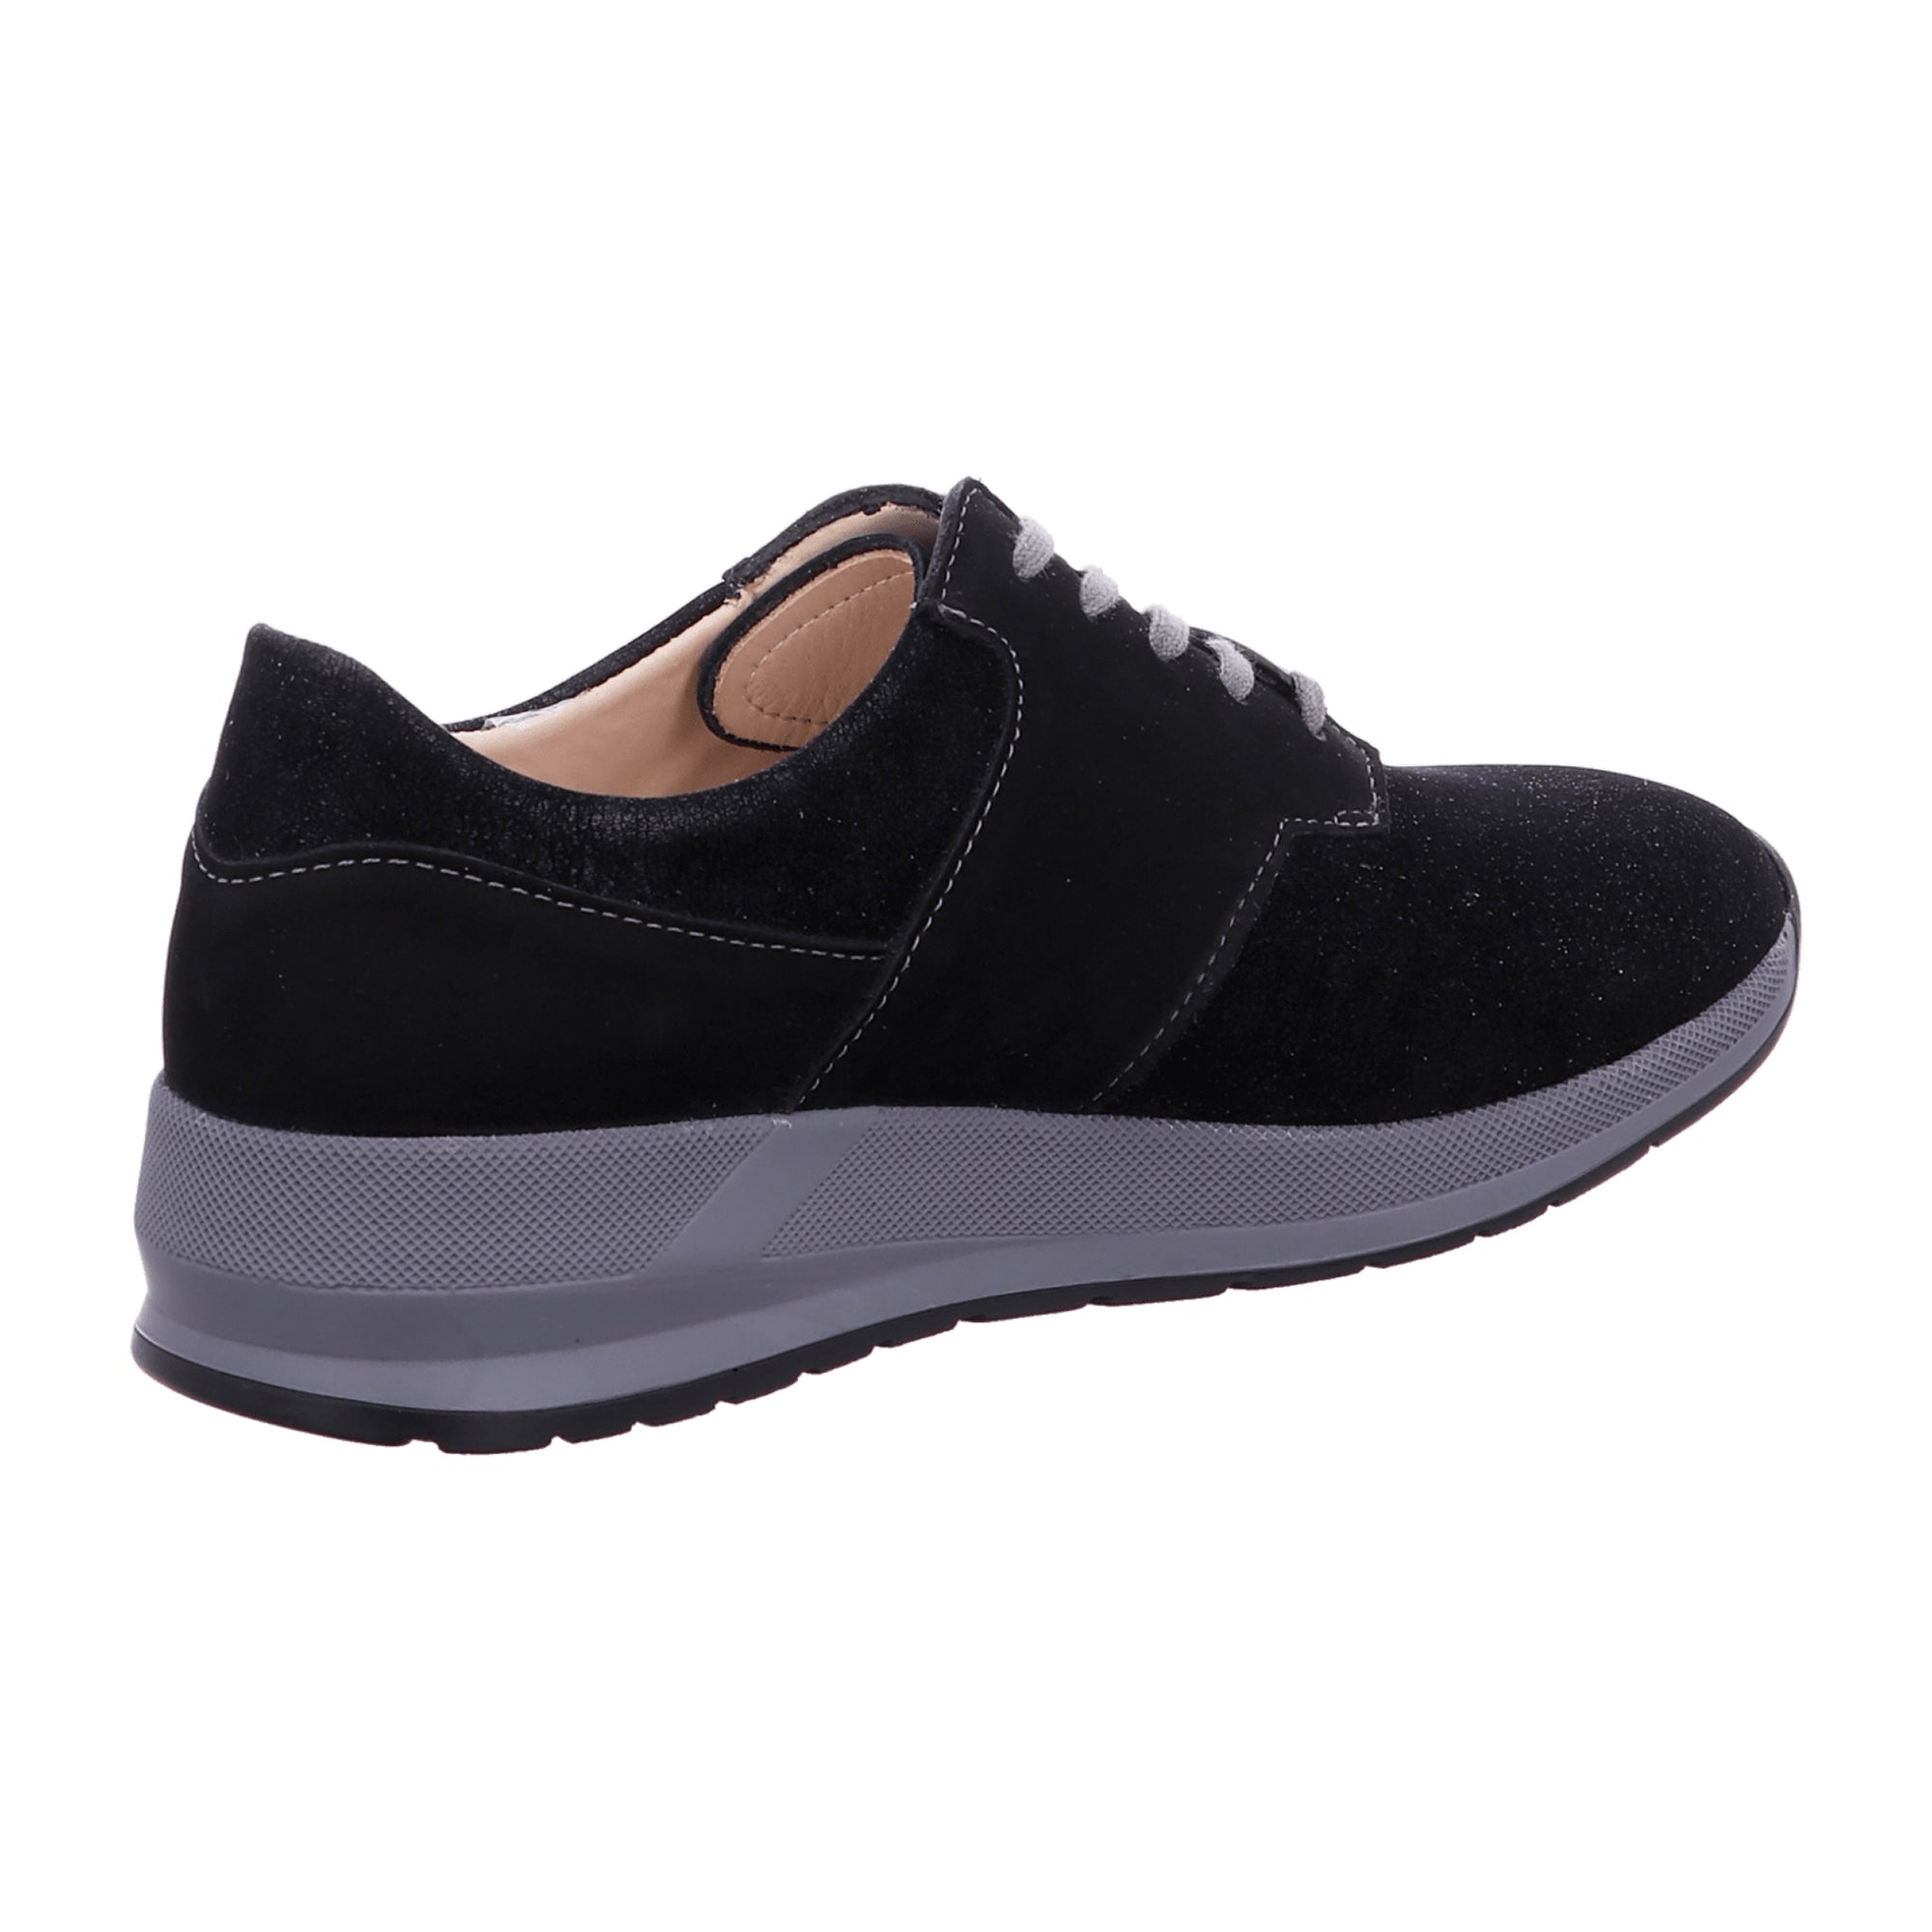 Finn Comfort Caino Women's Orthopedic Comfort Shoes, Sleek Black